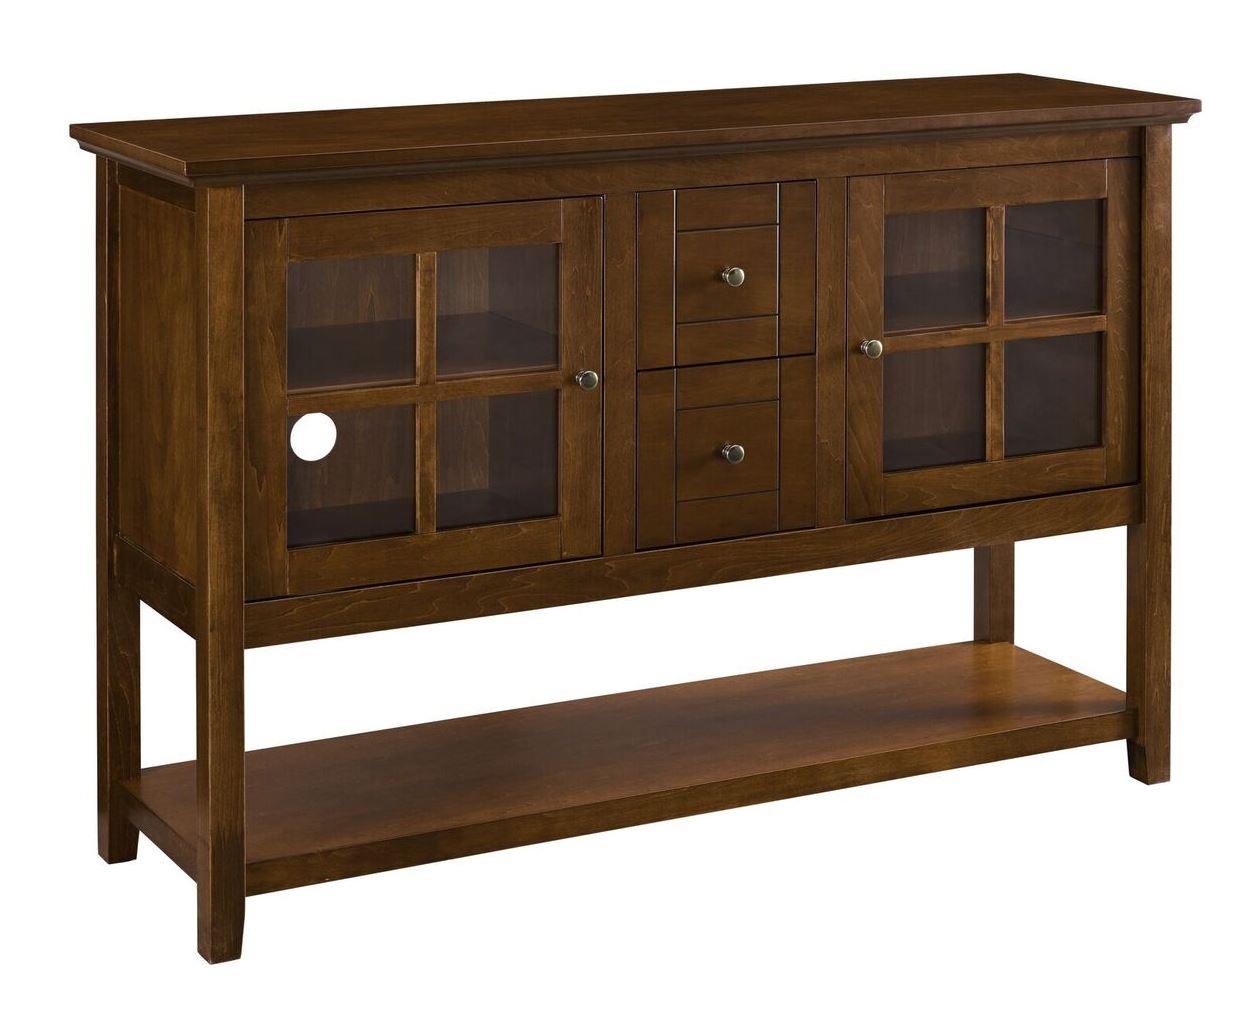 52" Wood Console Table Buffet / Tv Stand In Walnut - Walker Edison W52c4ctwt